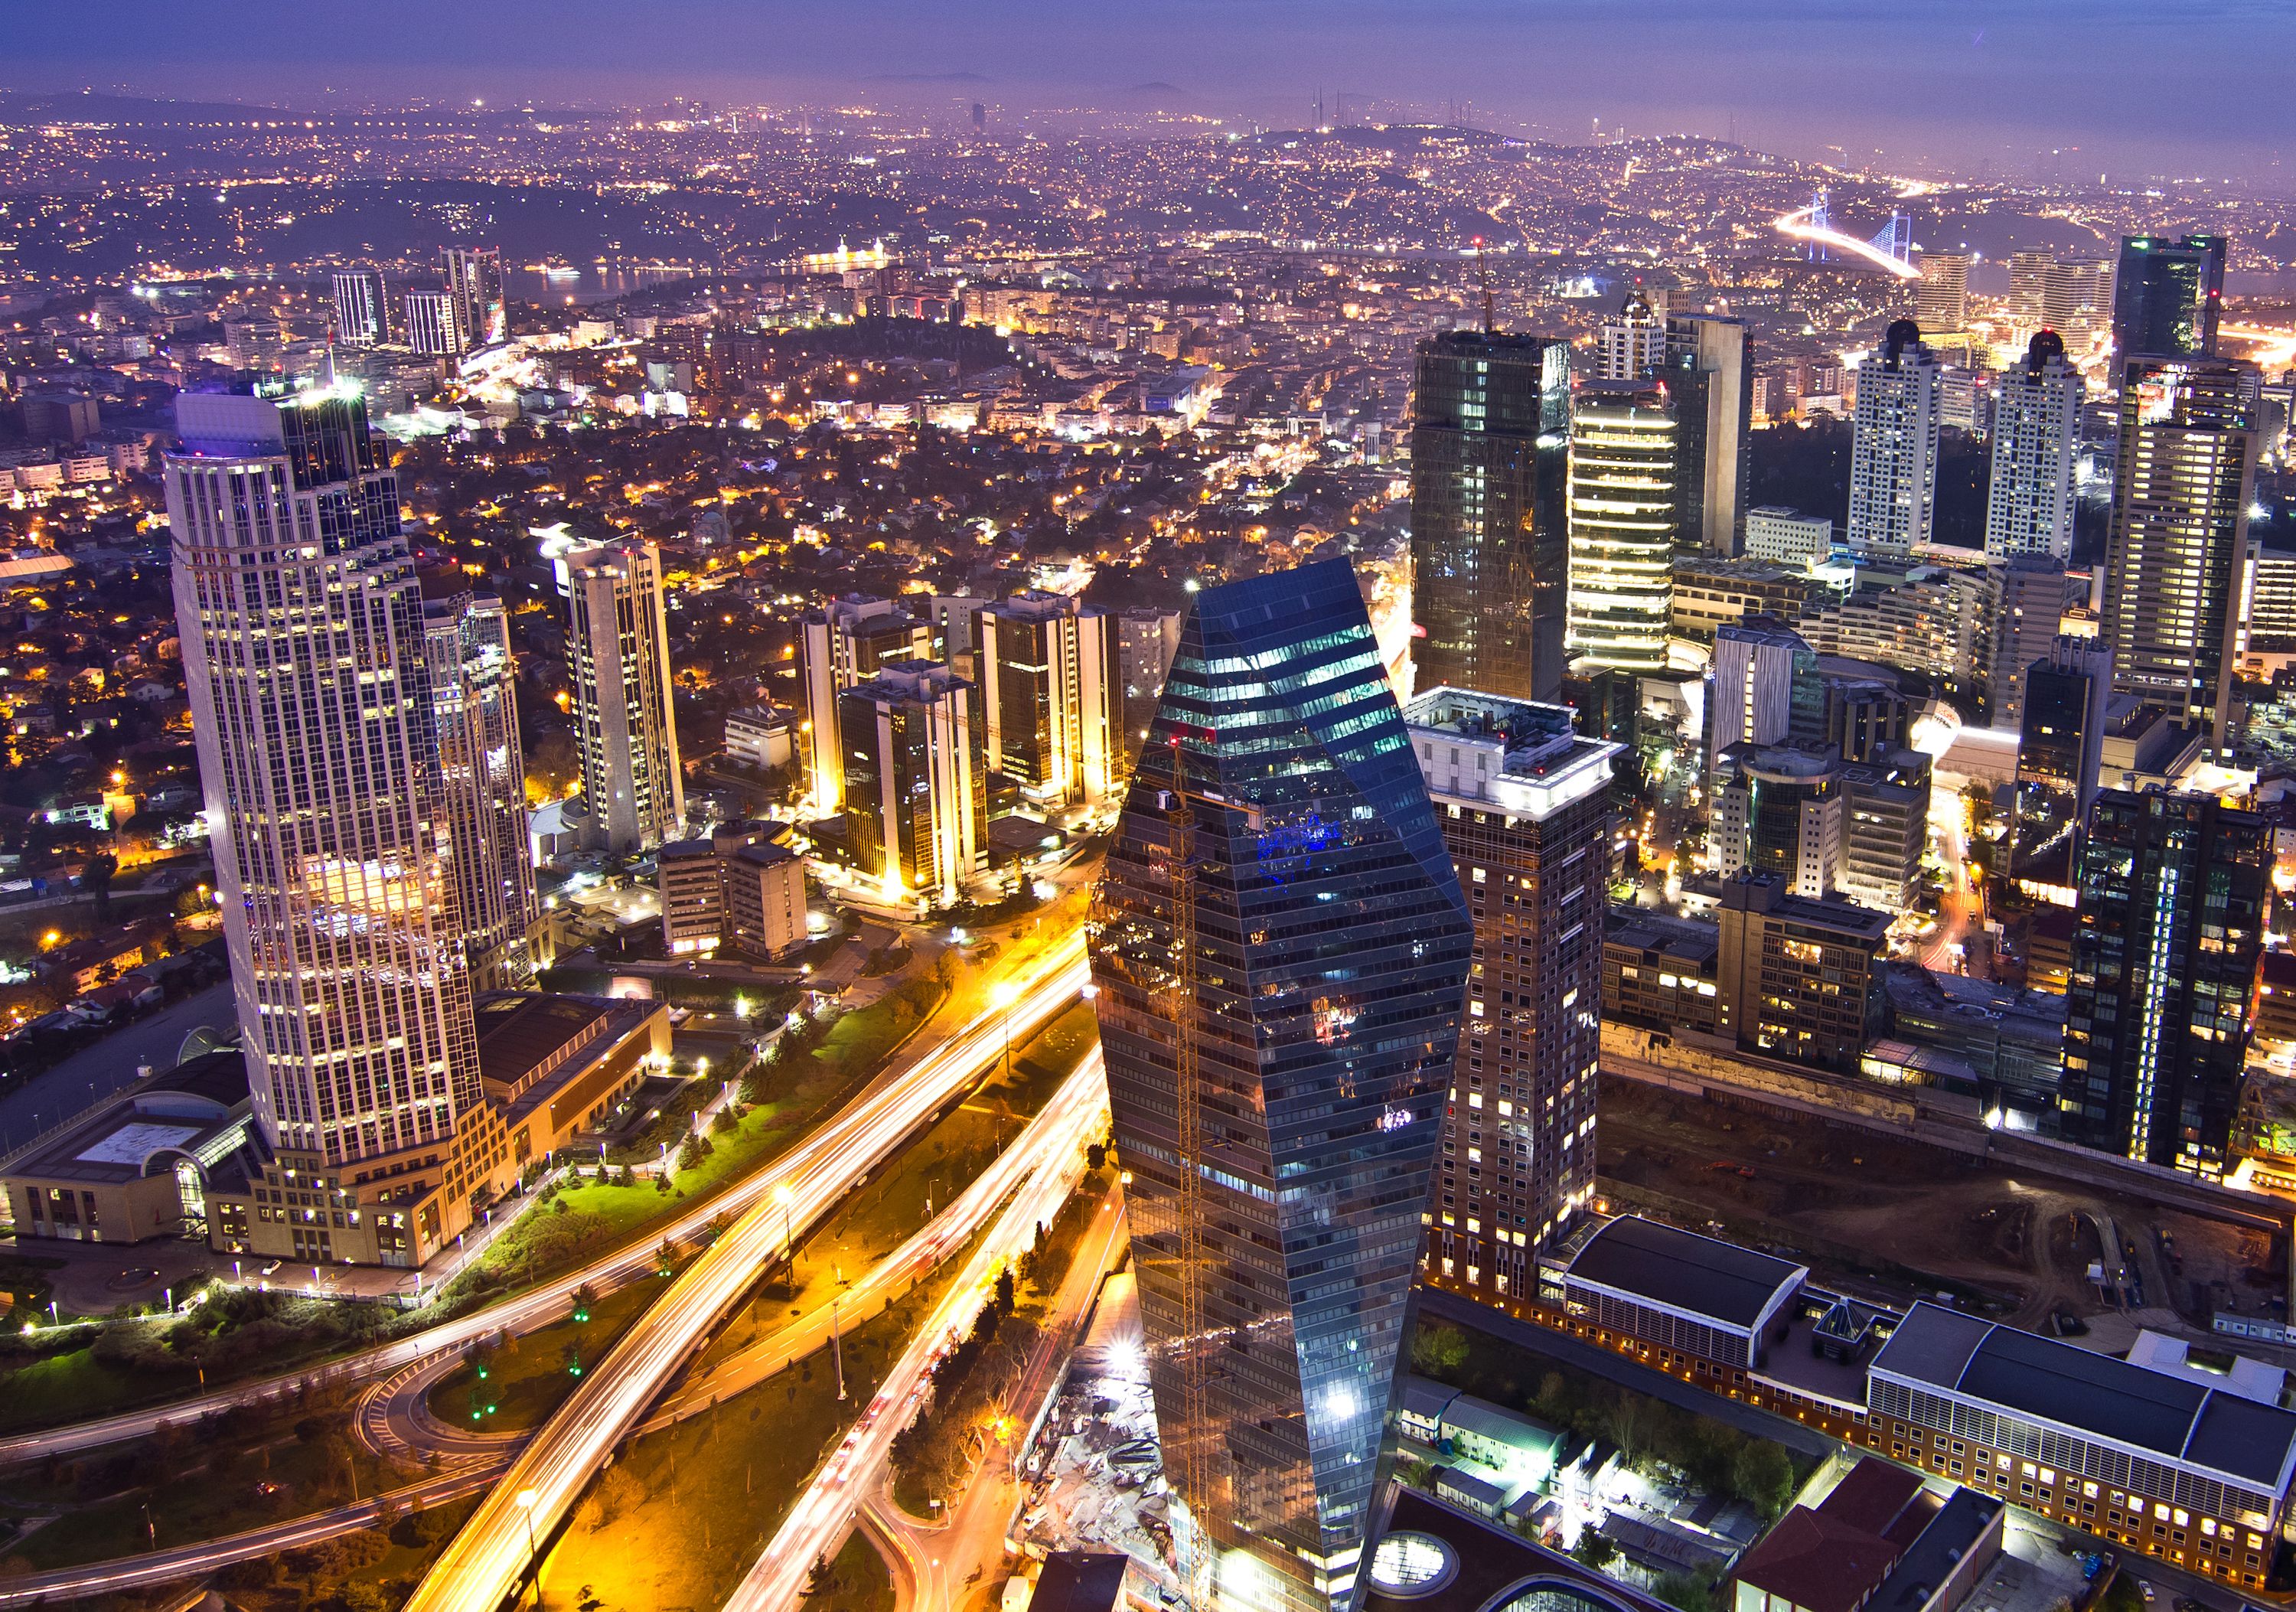 Вид на финансовый район Левент в Стамбуле со смотровой площадки отеля Istanbul Sapphire. Фото: Derrick Brutel. 2013. Источник: Wikimedia Commons